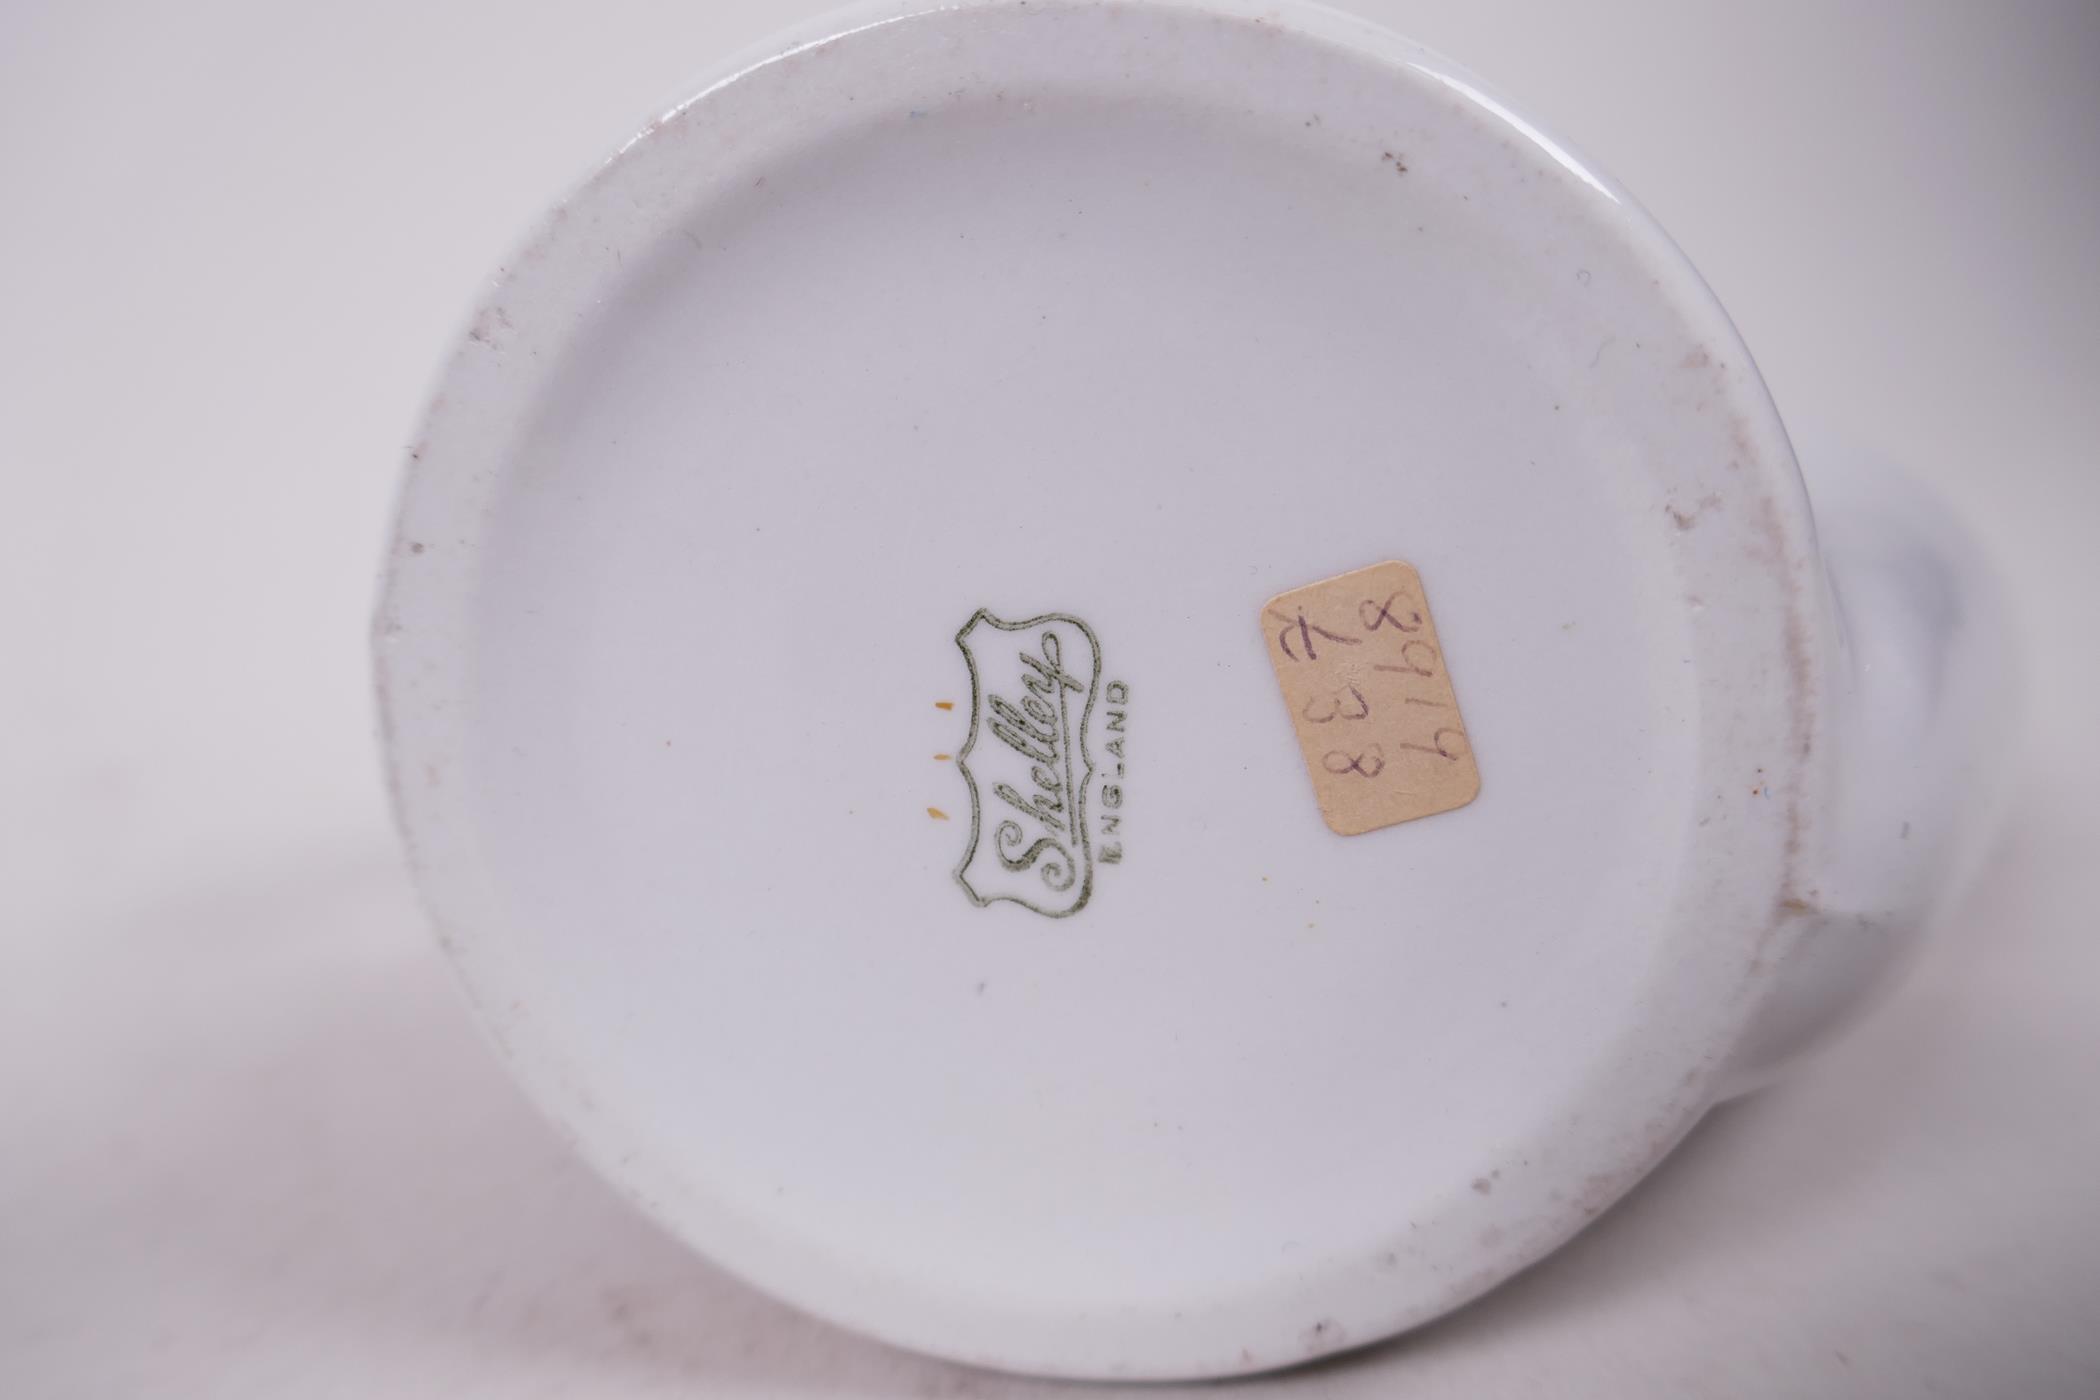 Three 1937 commemorative coronation shaving mugs, cream and white glazed ceramic - Image 11 of 11